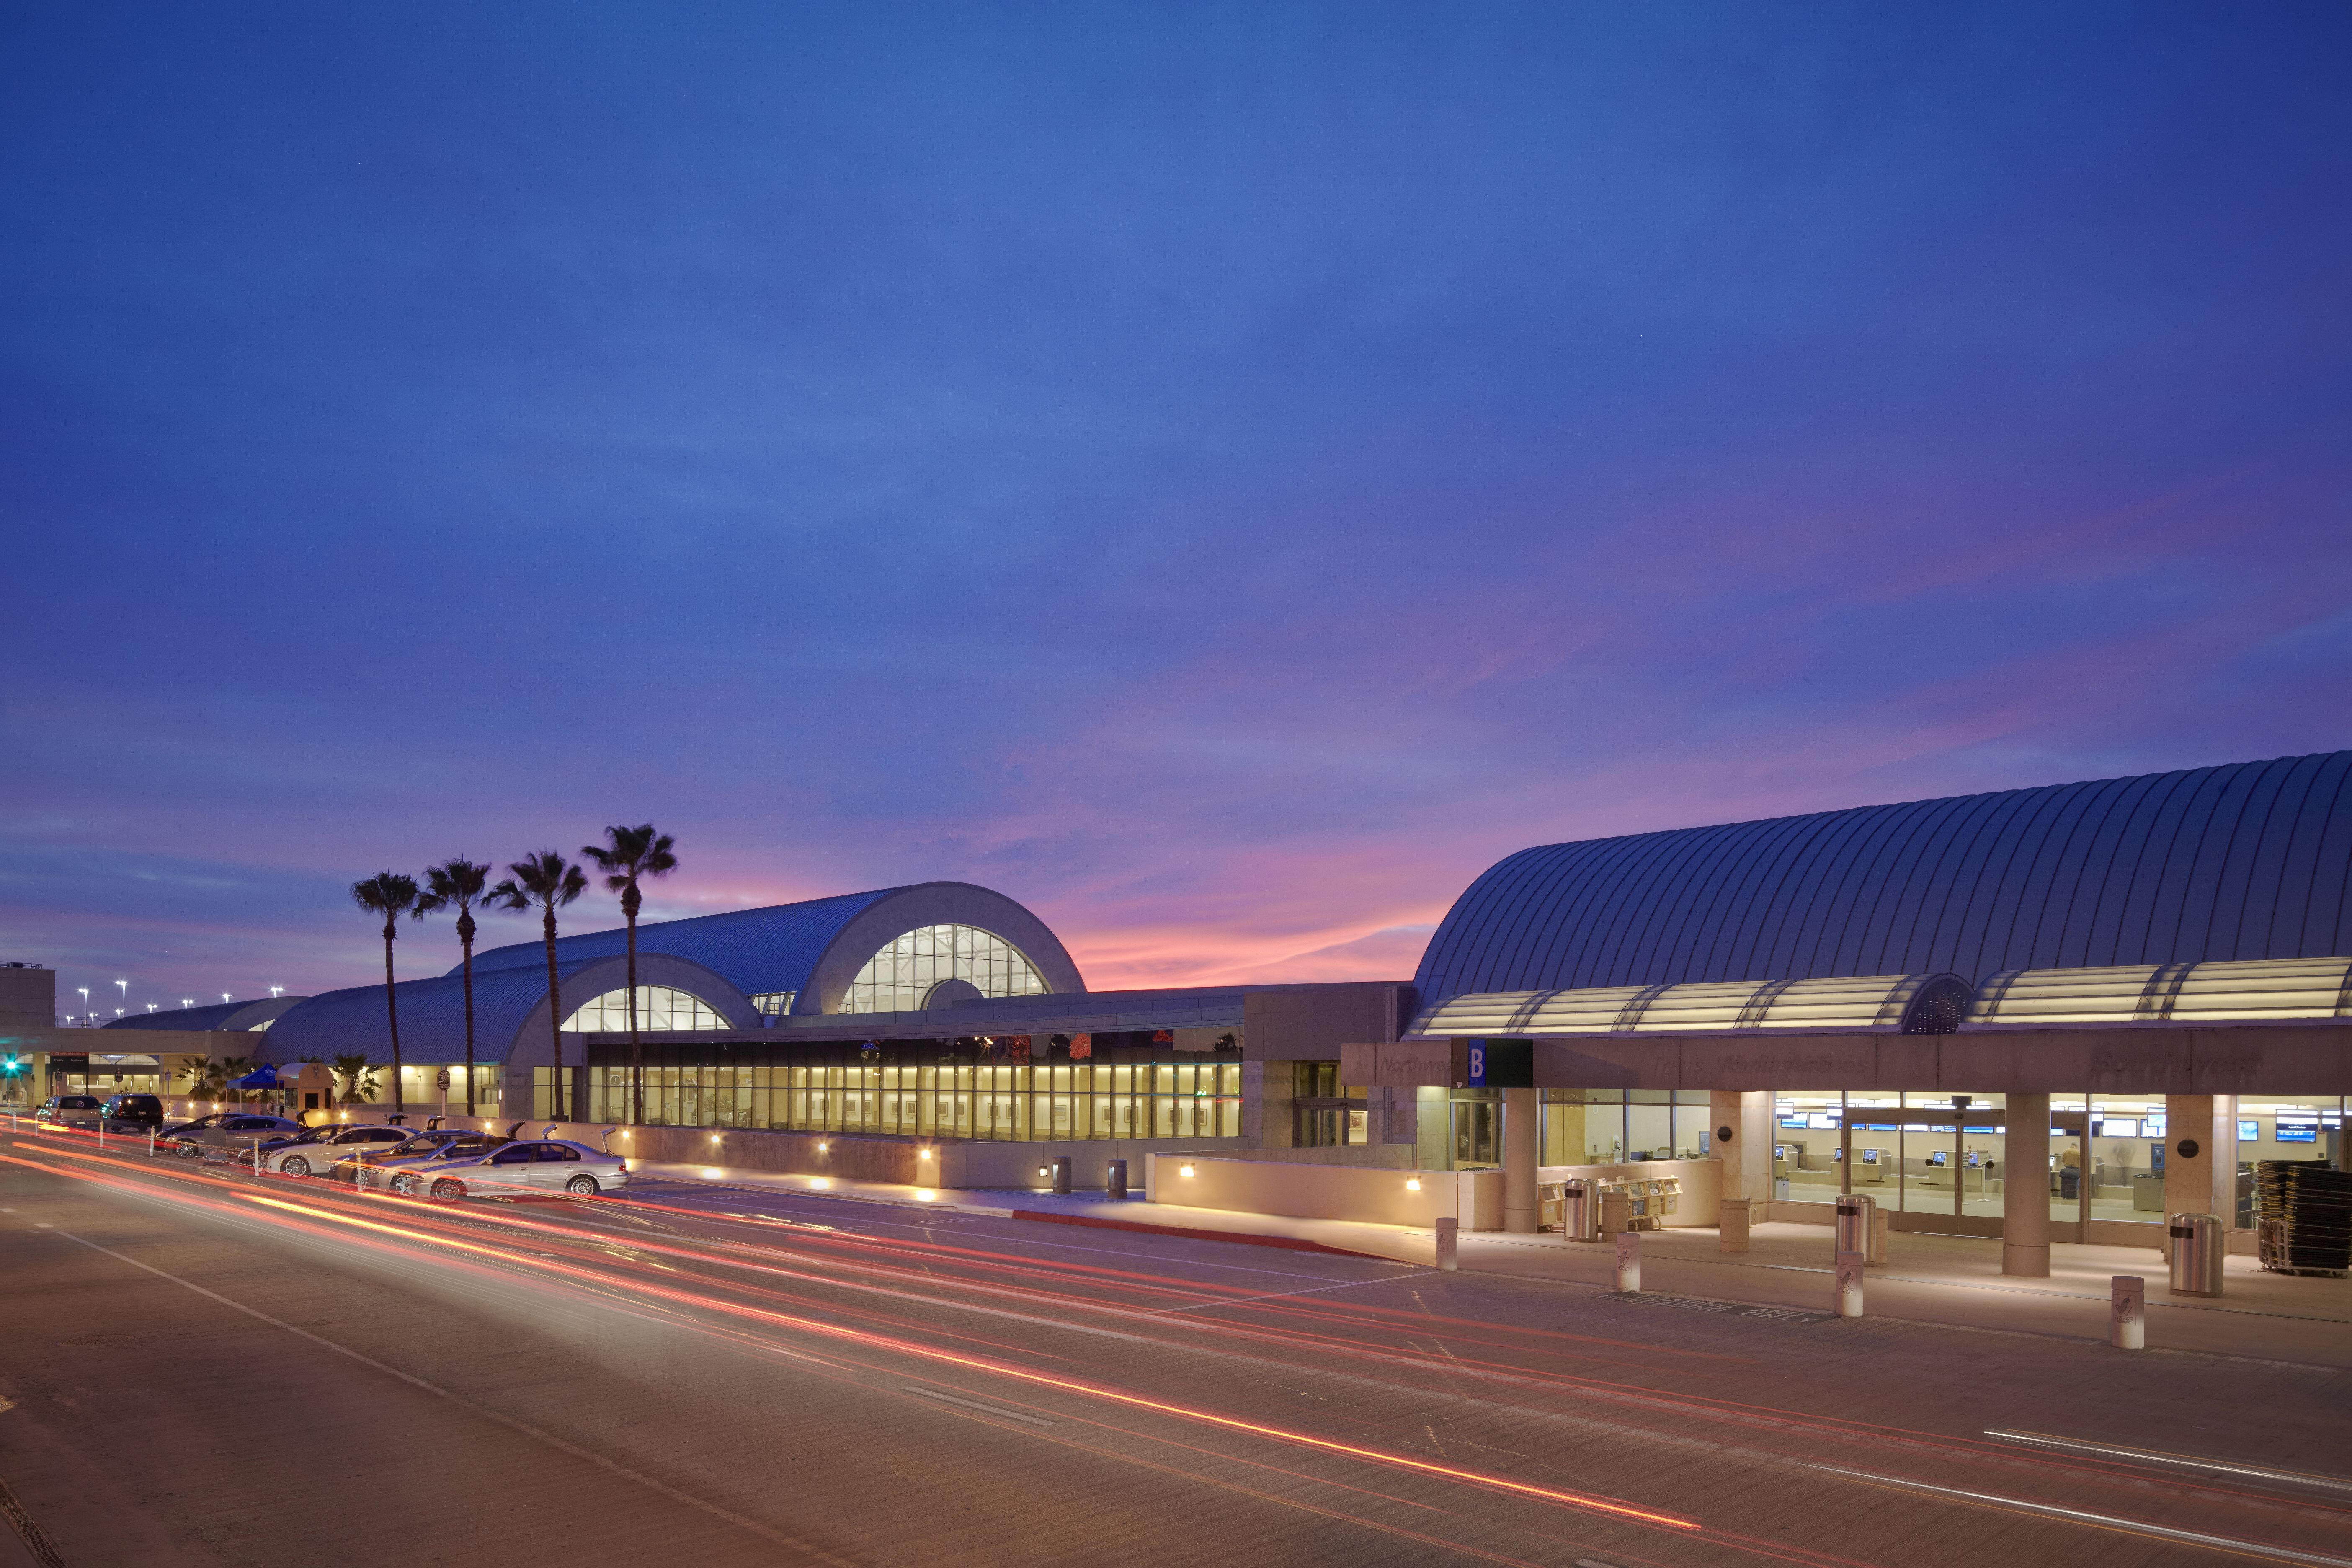 John Wayne Airport Terminal C  Santa Ana, California
Architect - Gensler